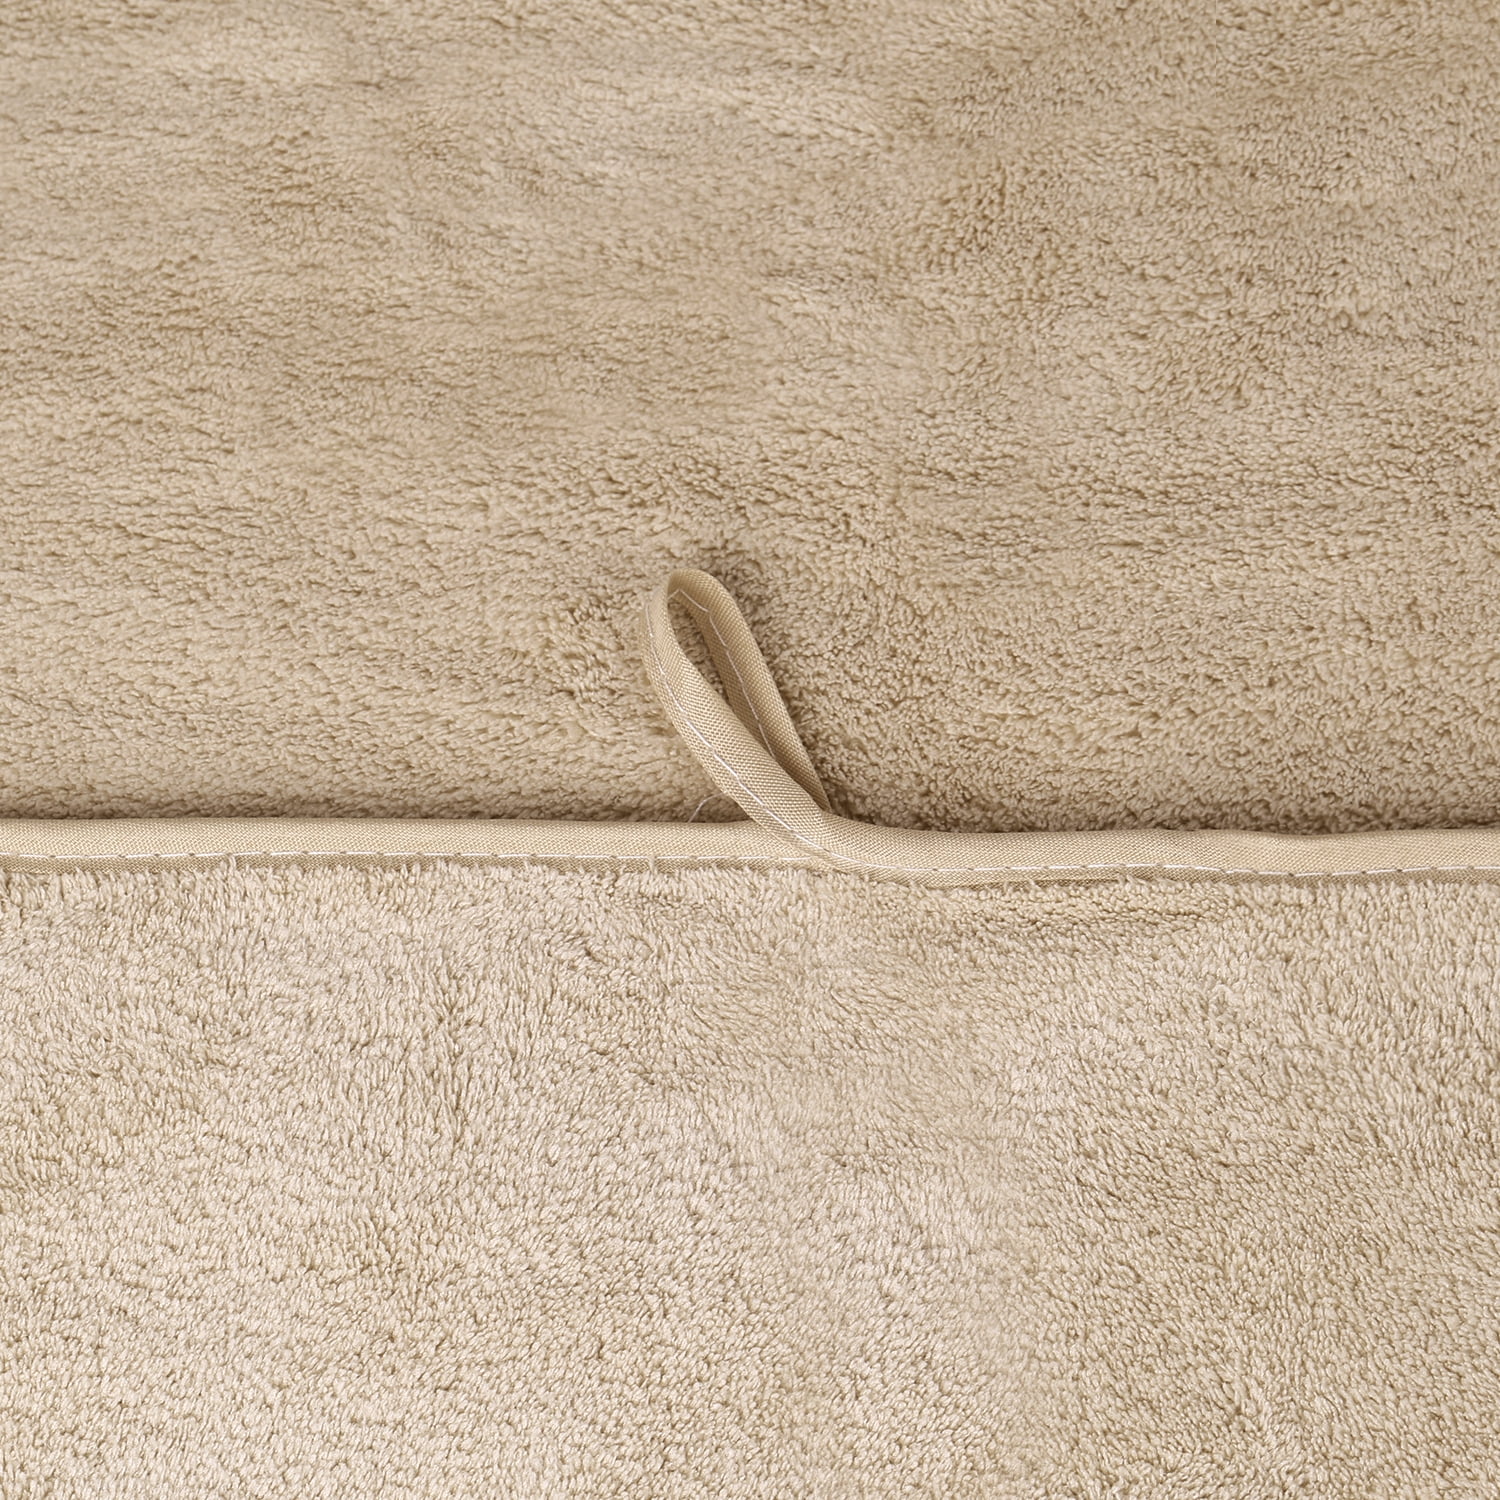 Soft Plush Fleece Bath Towels Set in 2 Packs Finest & Comfort, 60x30  ,Solid Colors 